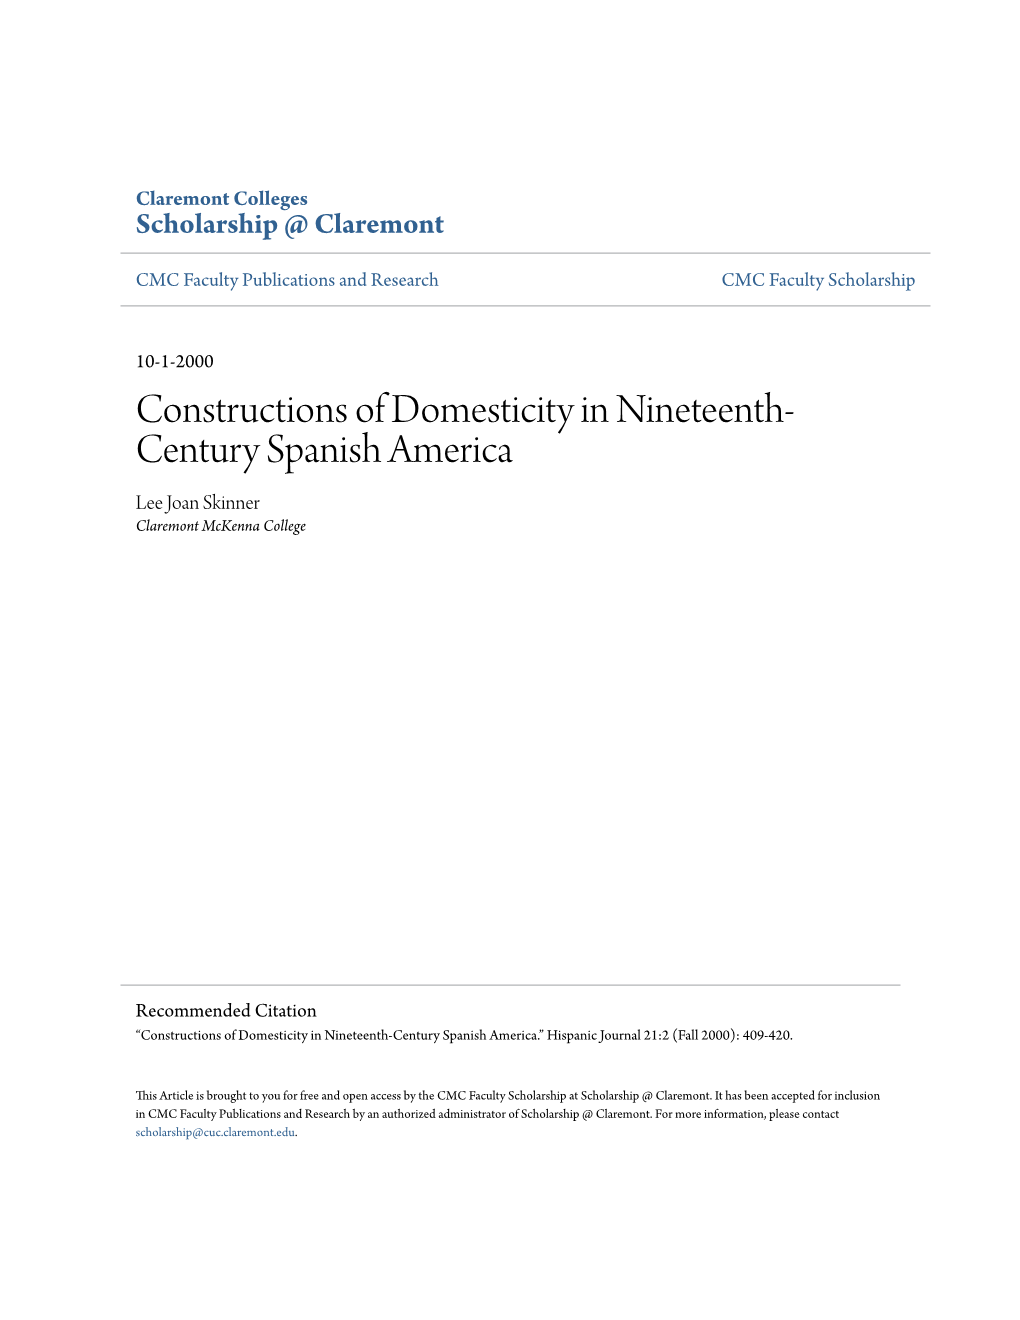 Constructions of Domesticity in Nineteenth-Century Spanish America.” Hispanic Journal 21:2 (Fall 2000): 409-420